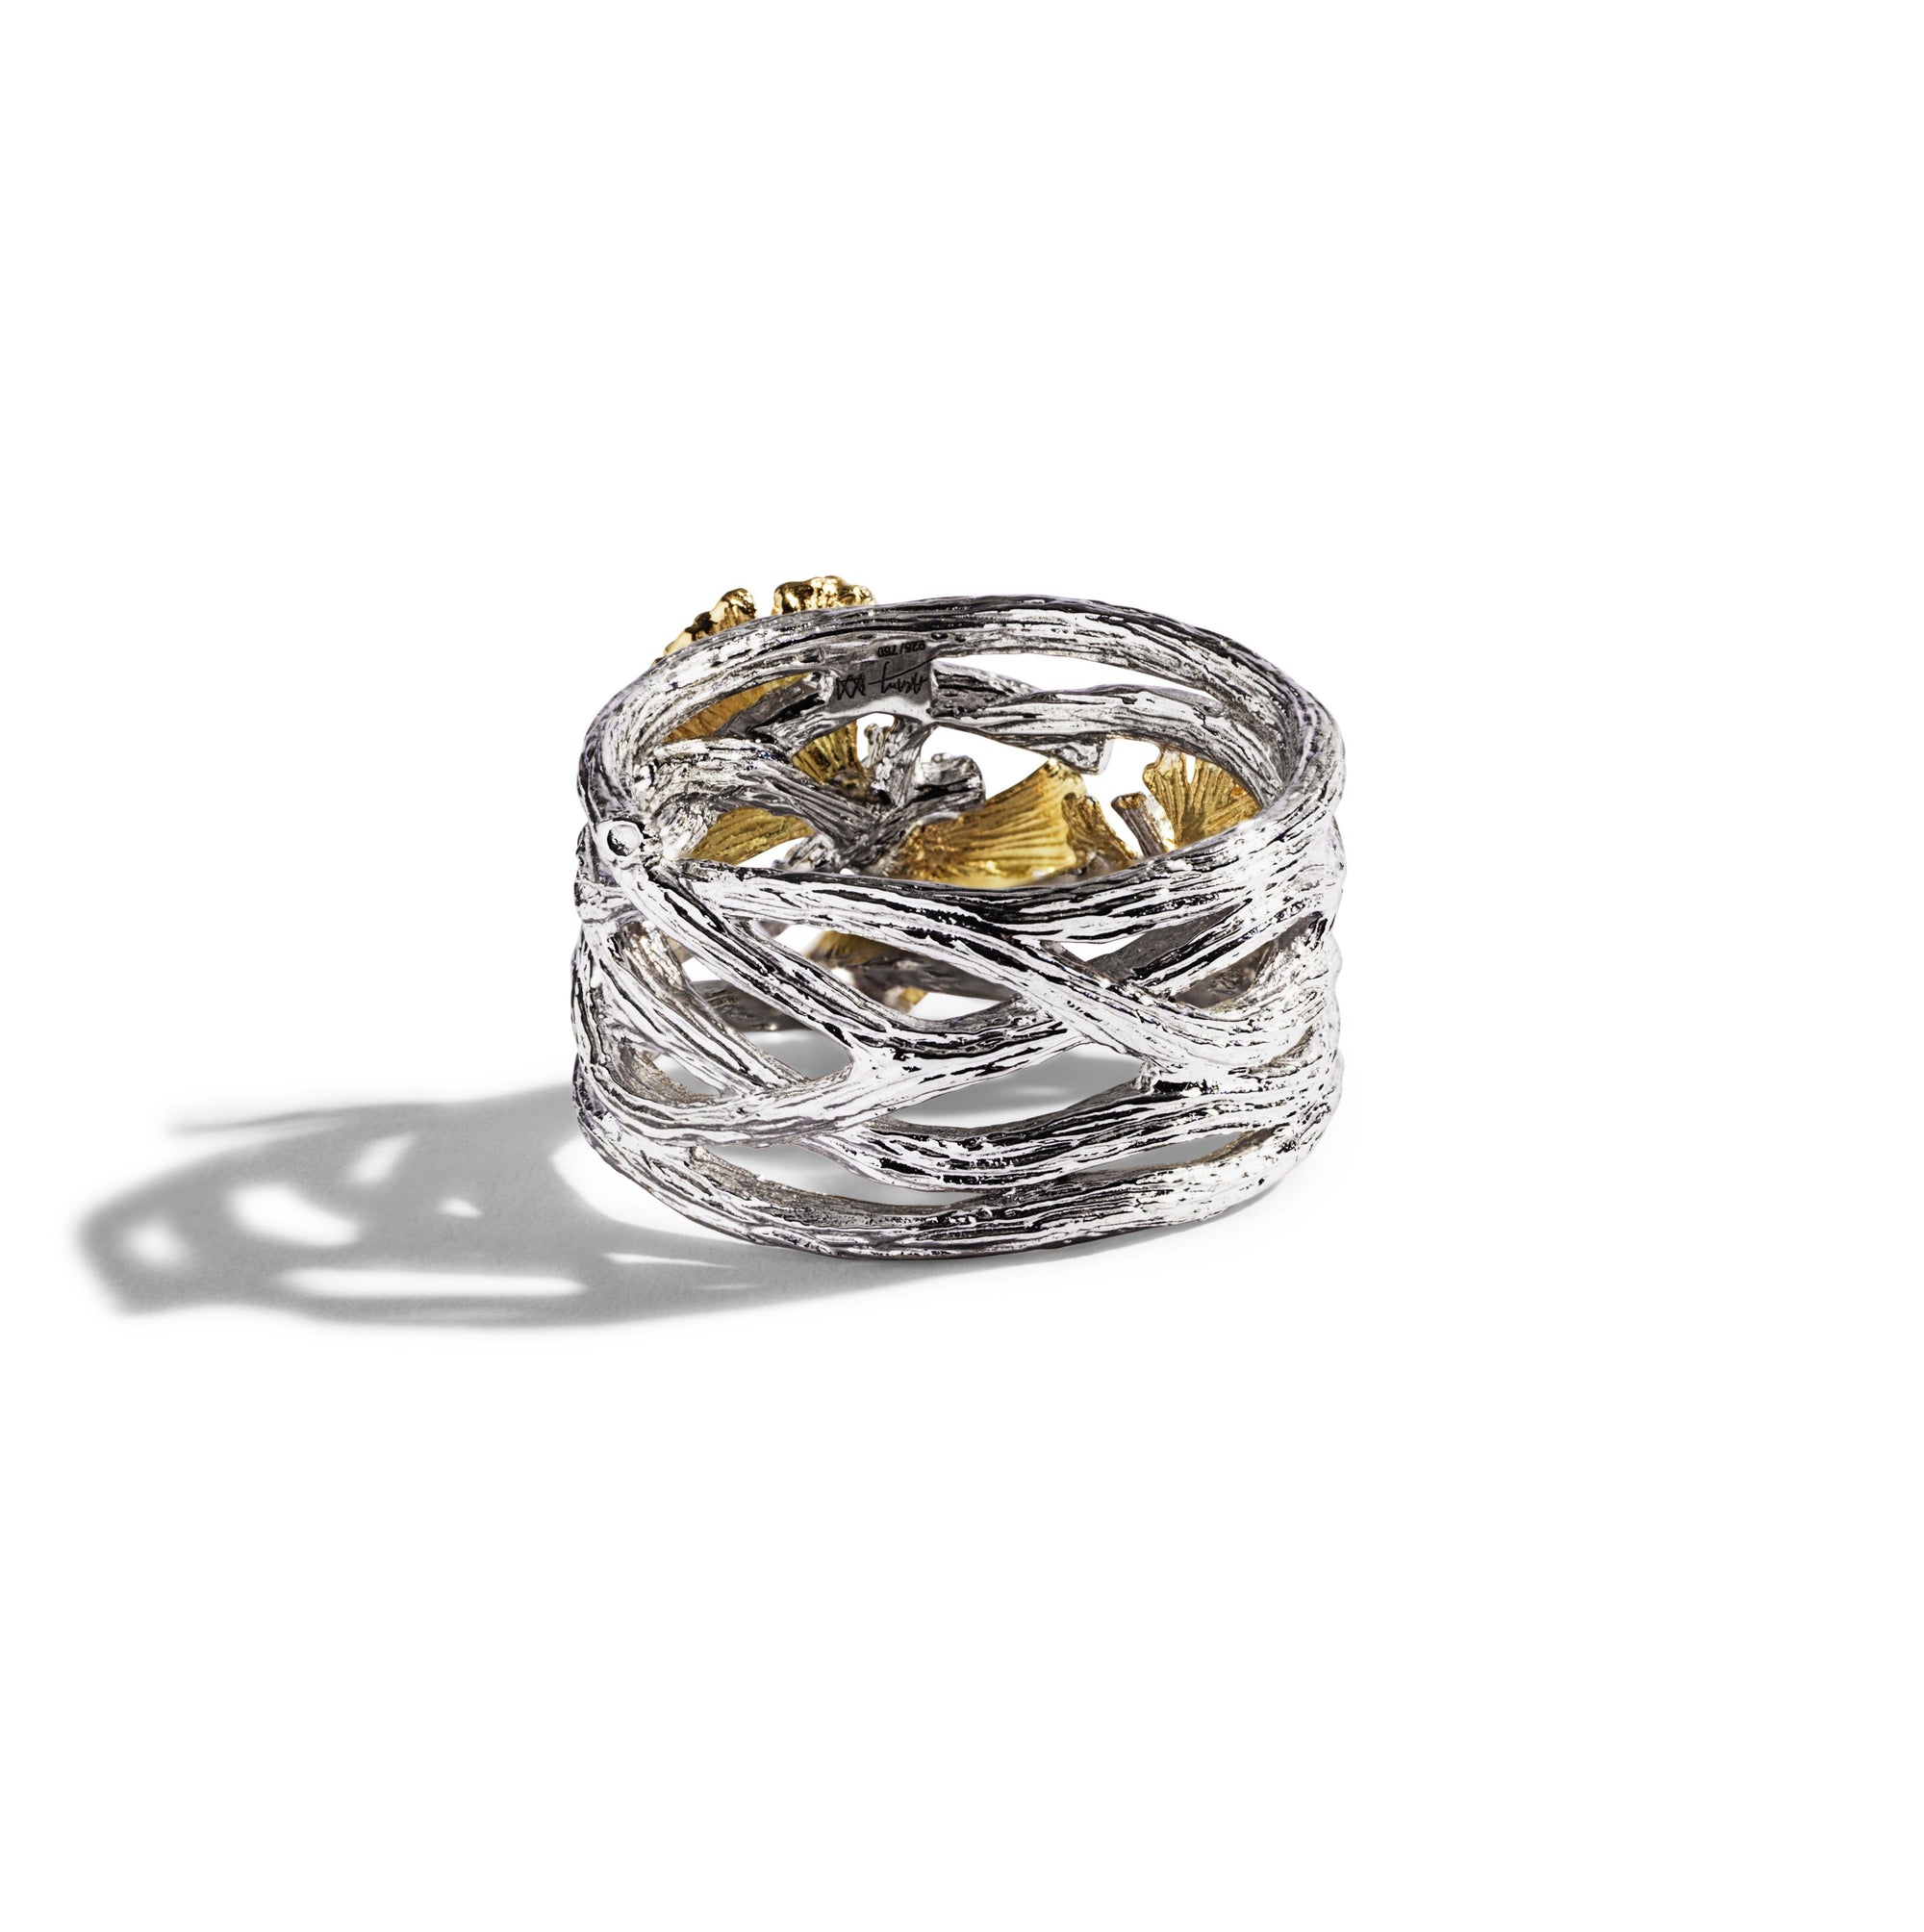 Michael Aram Butterfly Gingko Cuff Ring with Diamonds